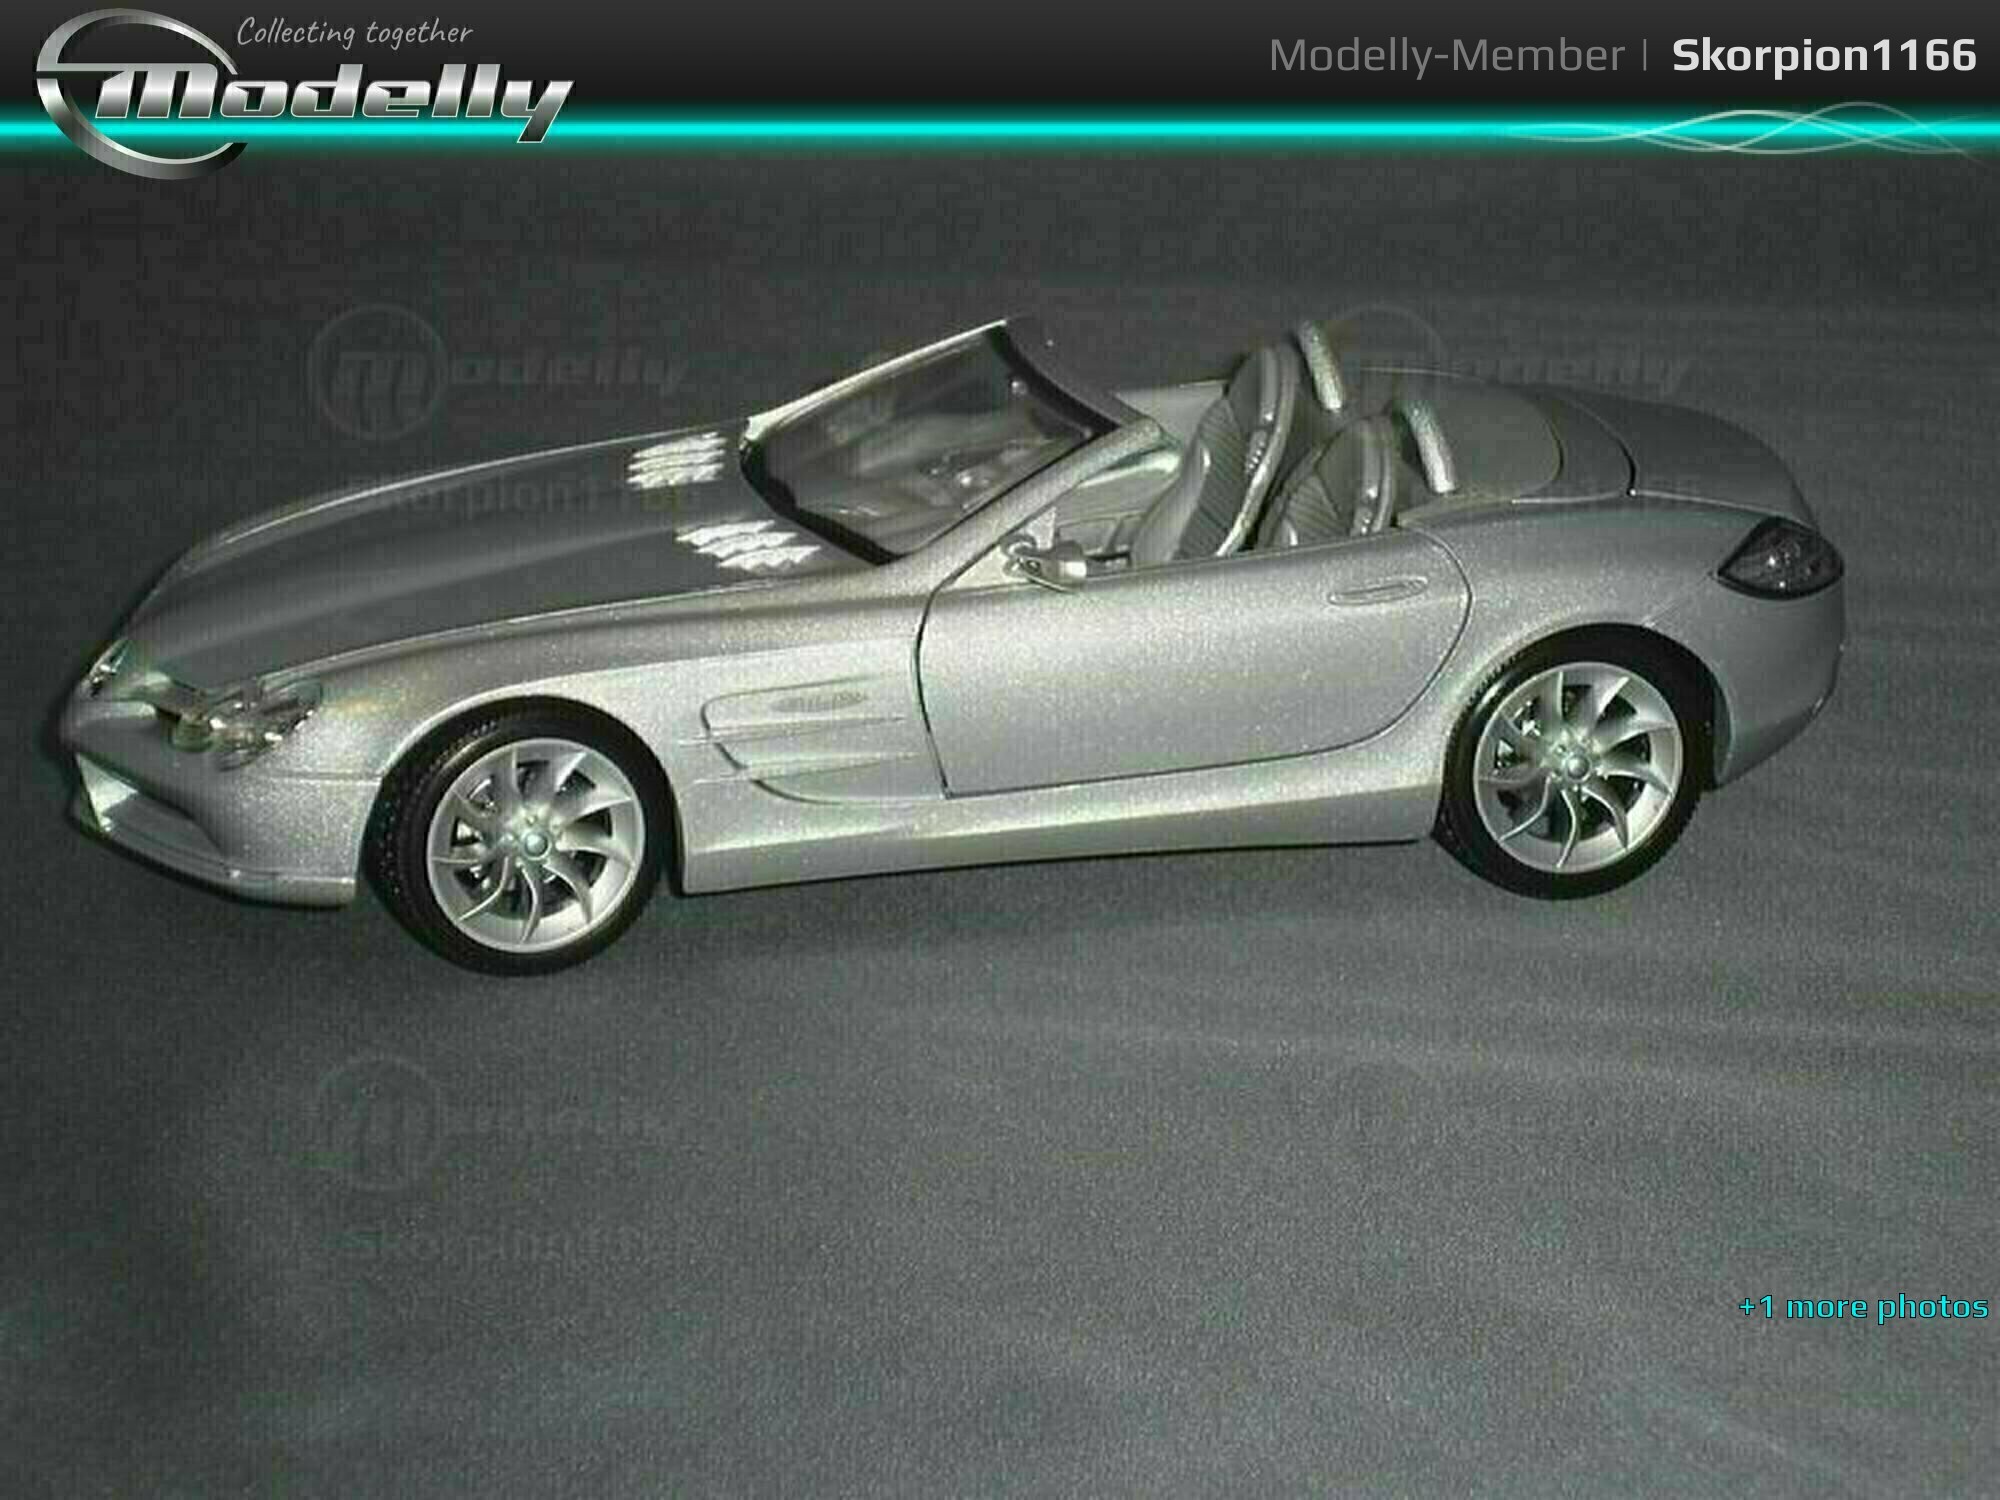 Mercedes slr vision made in poland #1